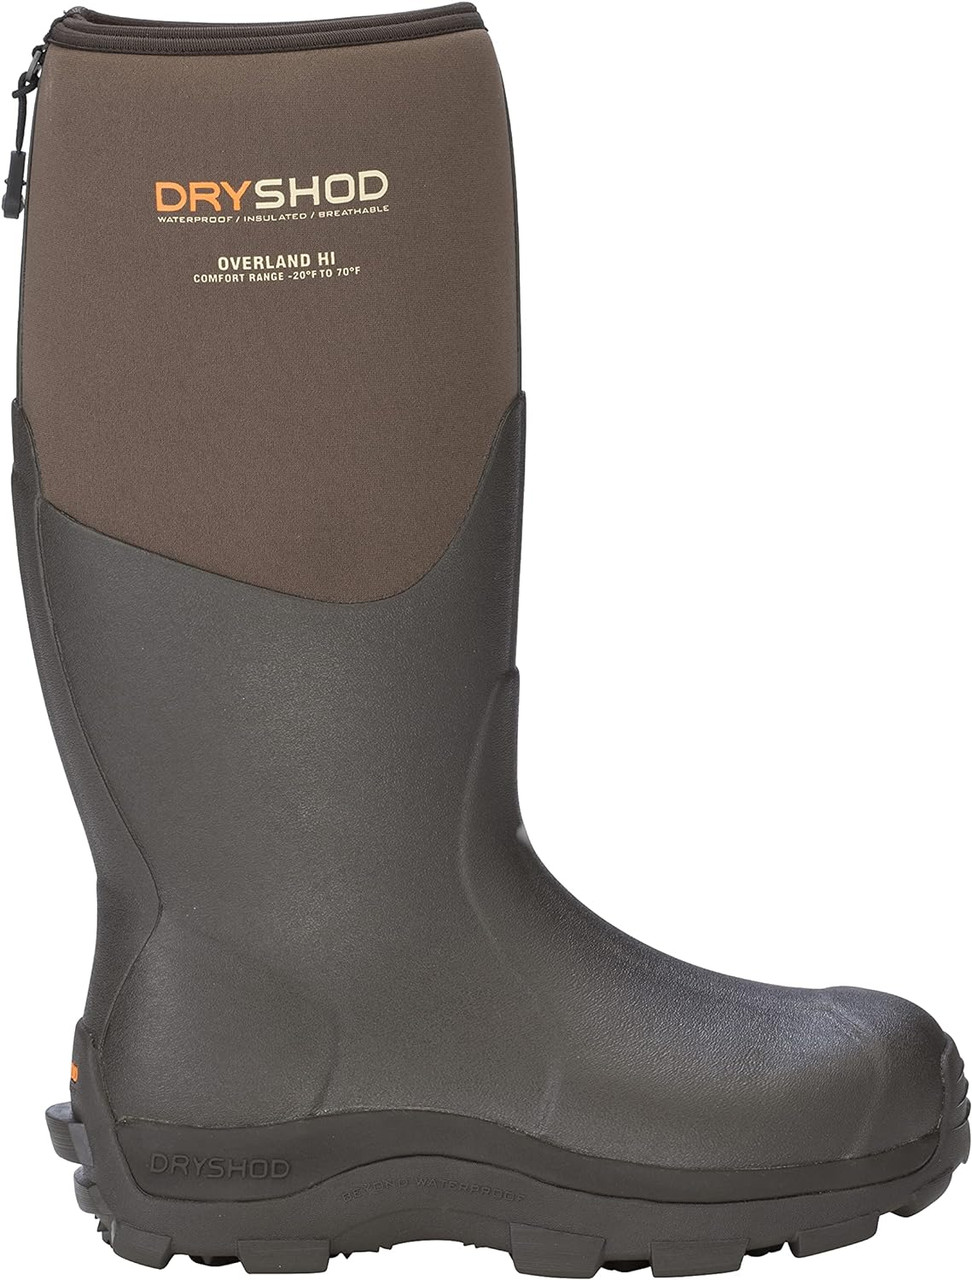 Dryshod Overland Hi Cut Boot, Khaki Timber, Size 10 - OVR-MH-KH-10